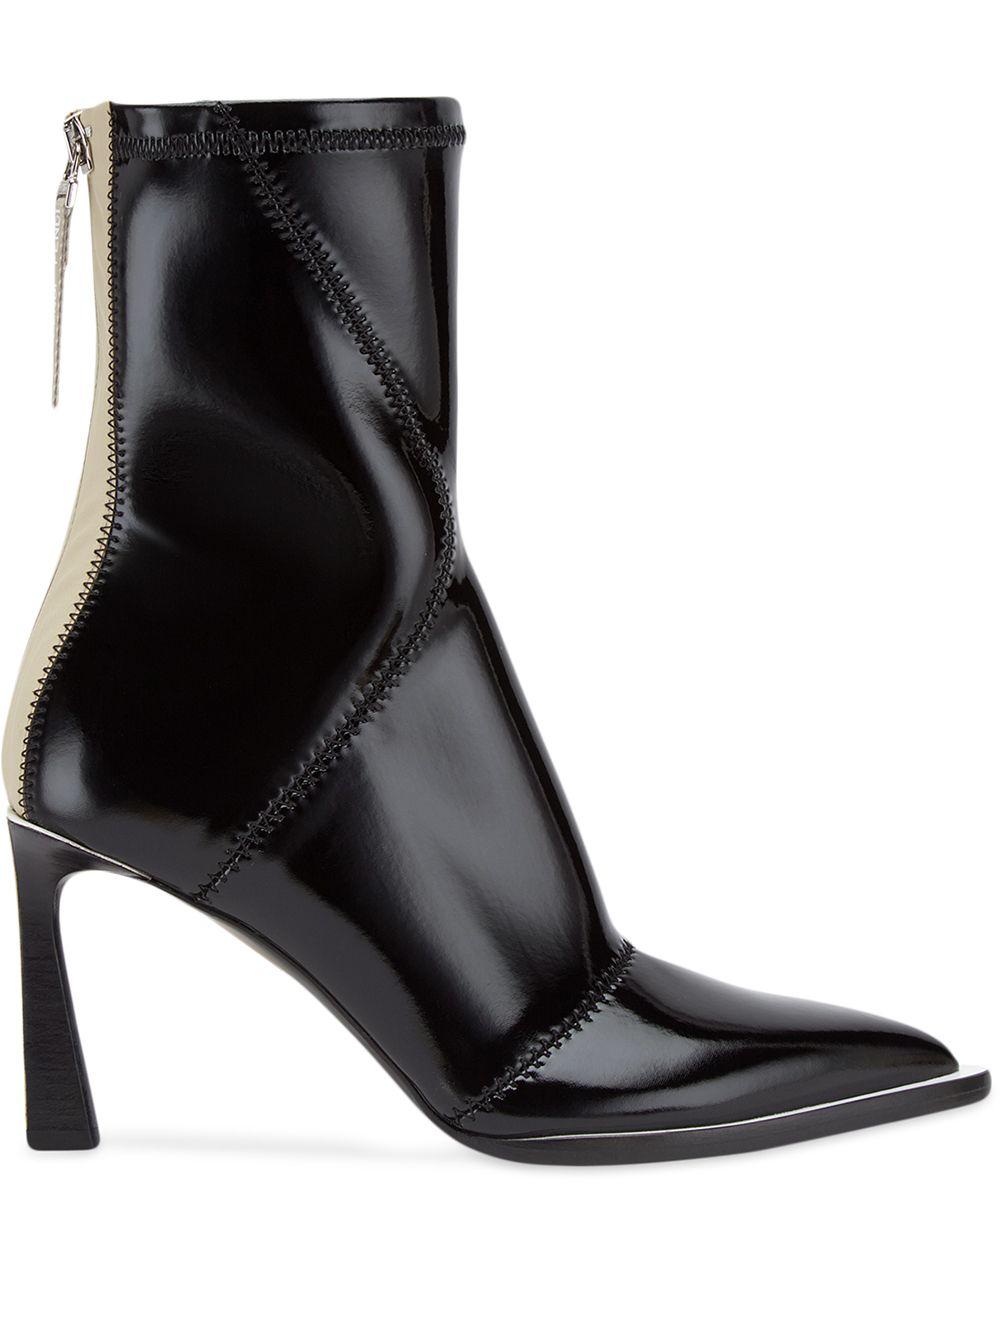 Fendi Fframe Structured Heel Ankle Boots in Black | Lyst